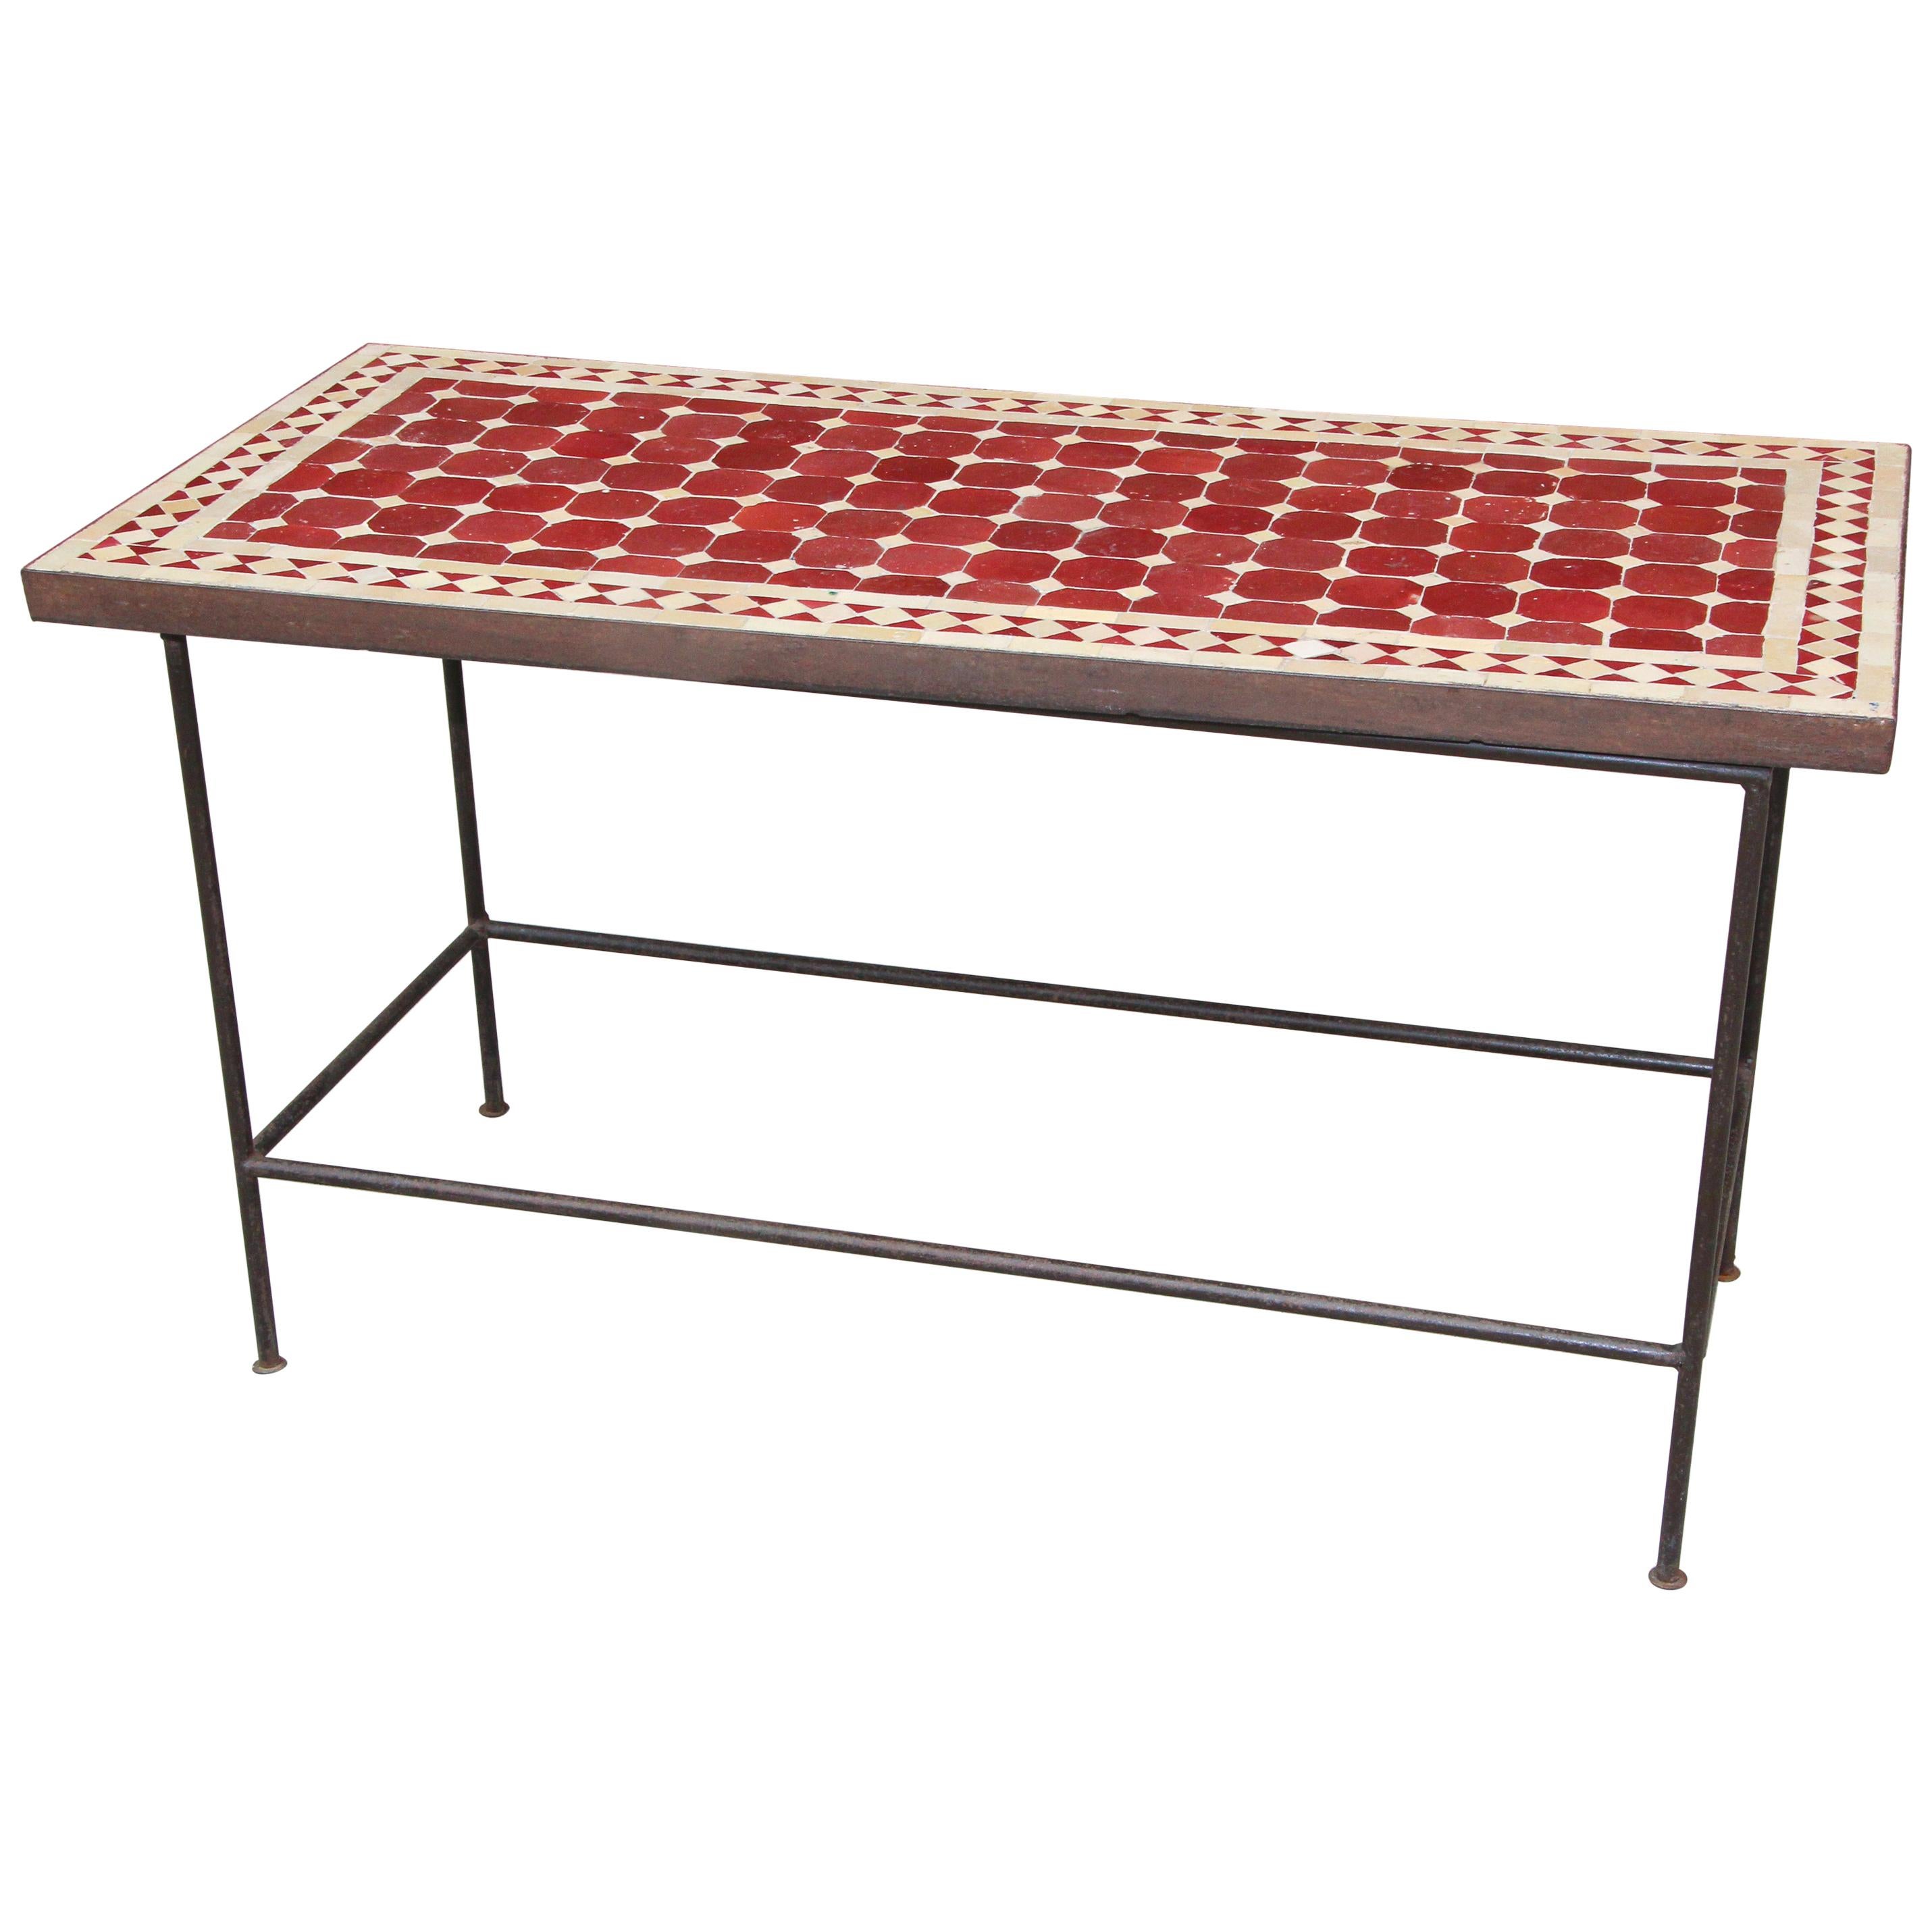 Moroccan Vintage Mosaic Red Tile Rectangular Side Table